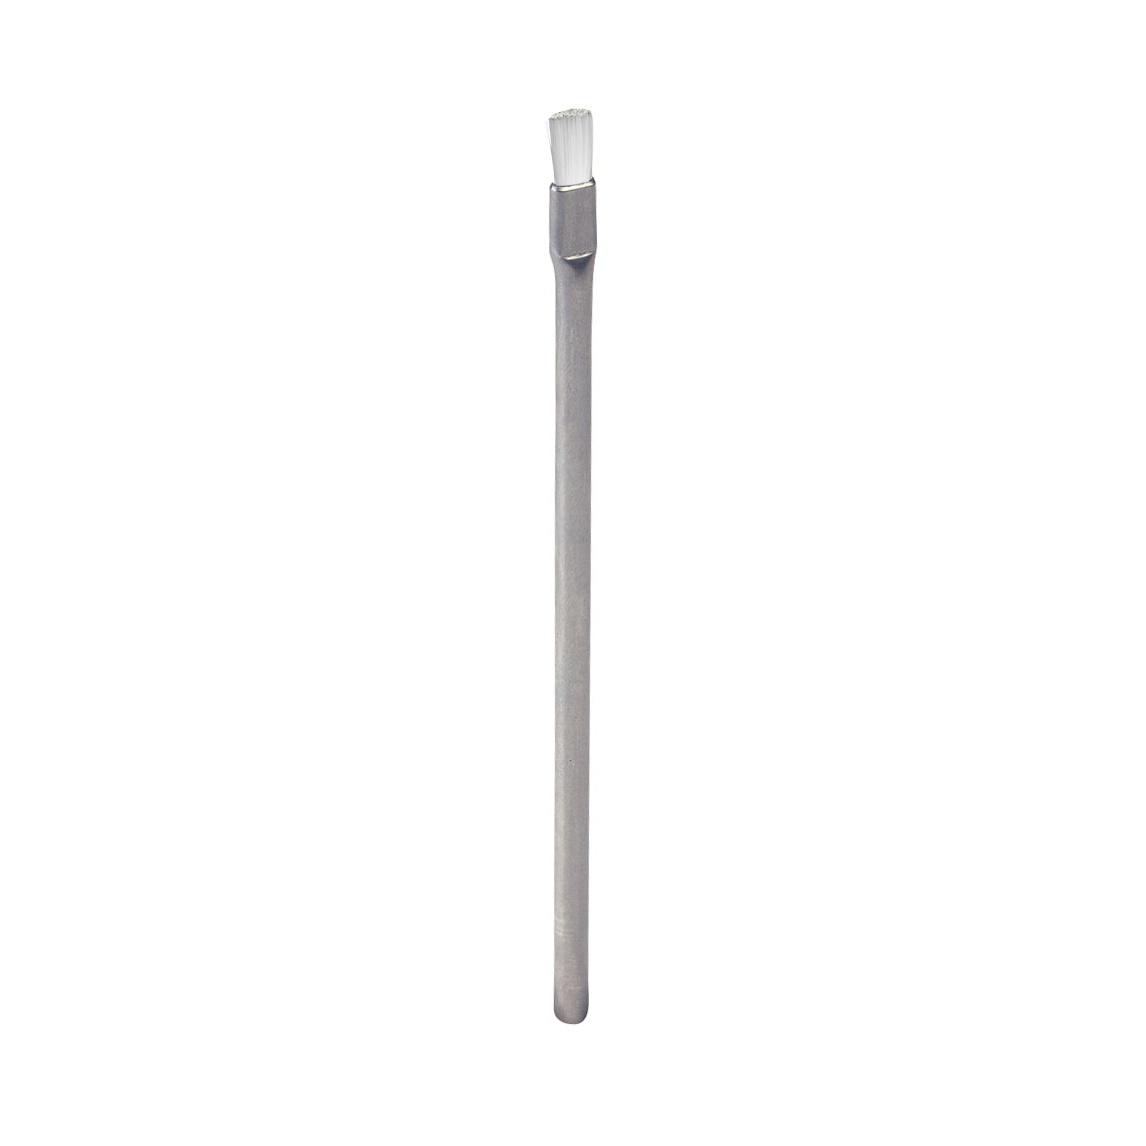 Applicator Brush — 0.006" PEEK Bristle / 3/16" Diameter Stainless Steel Tube Handle